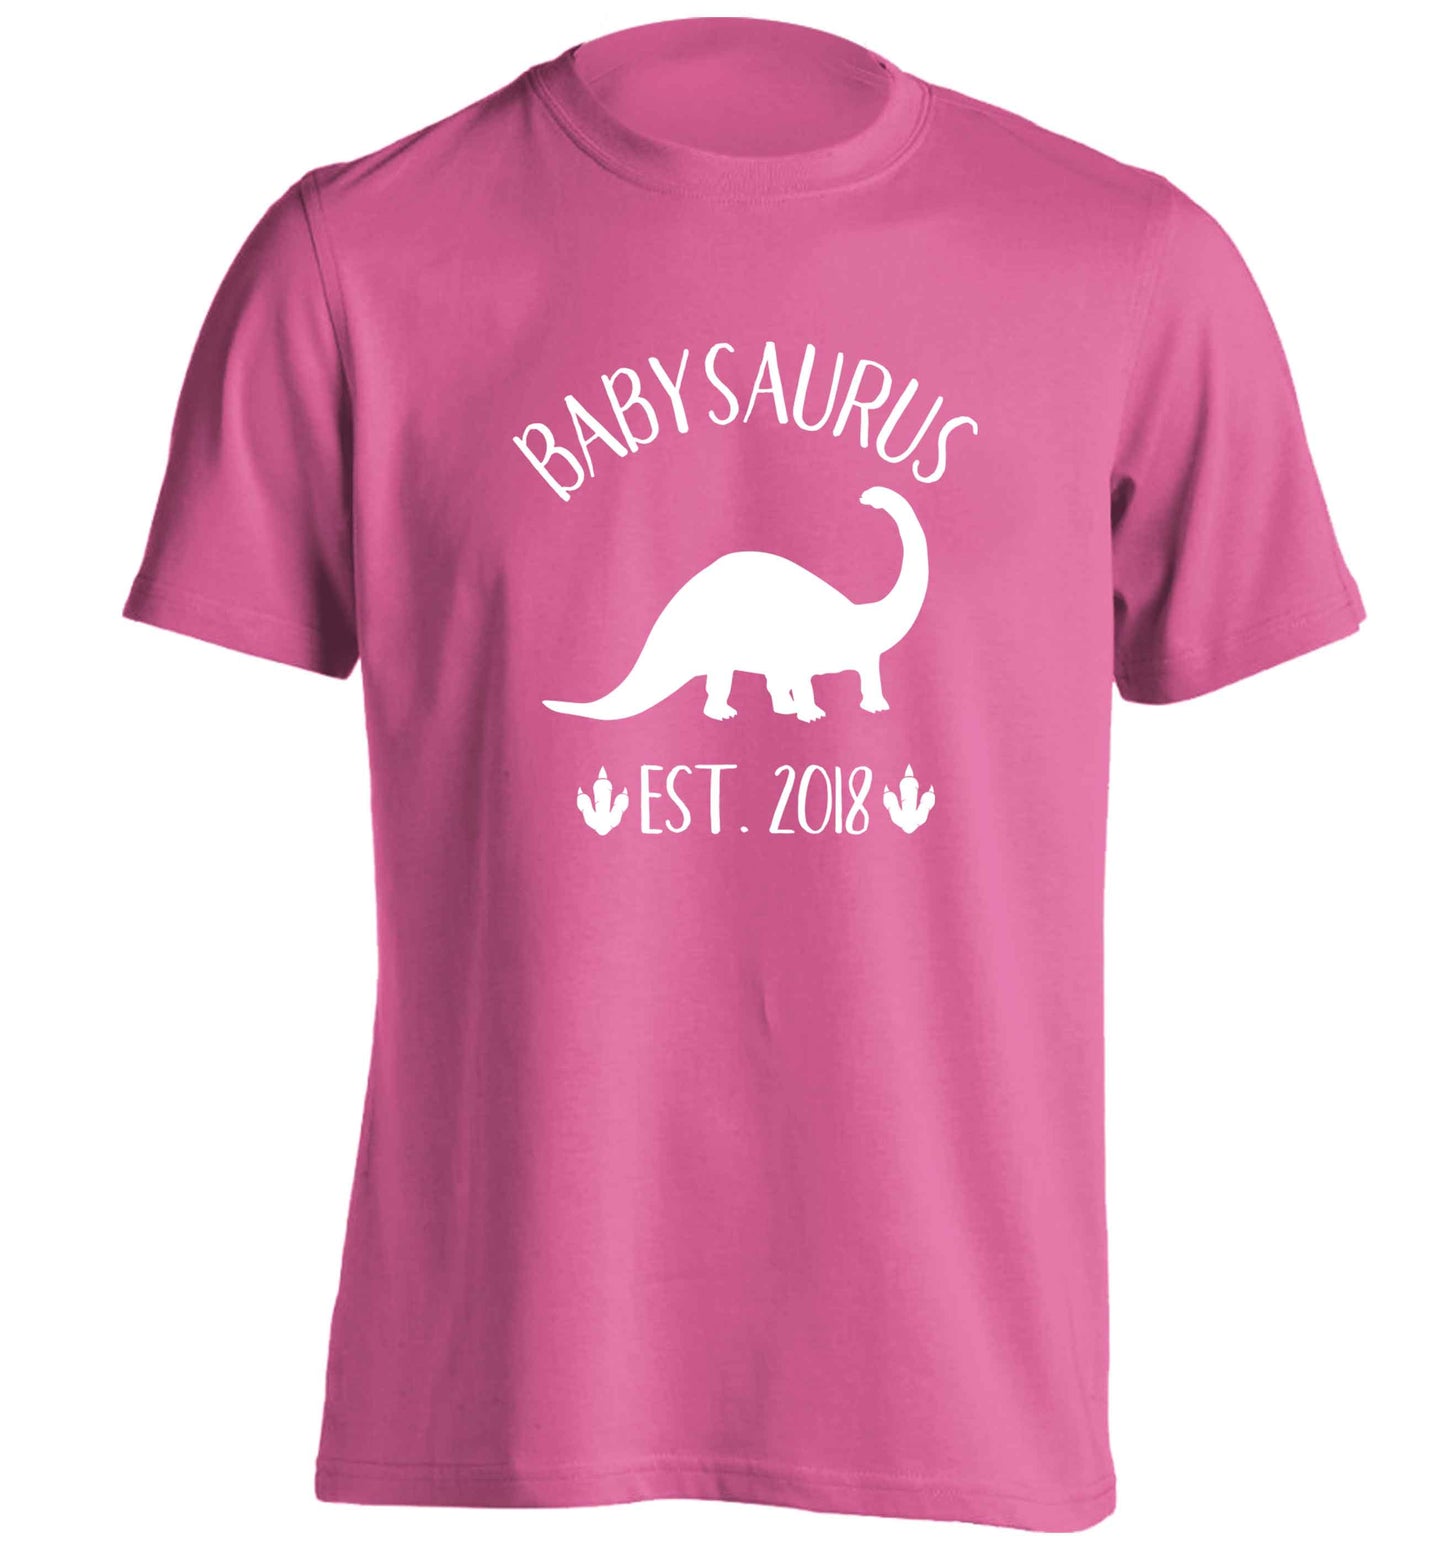 Personalised babysaurus since (custom date) adults unisex pink Tshirt 2XL